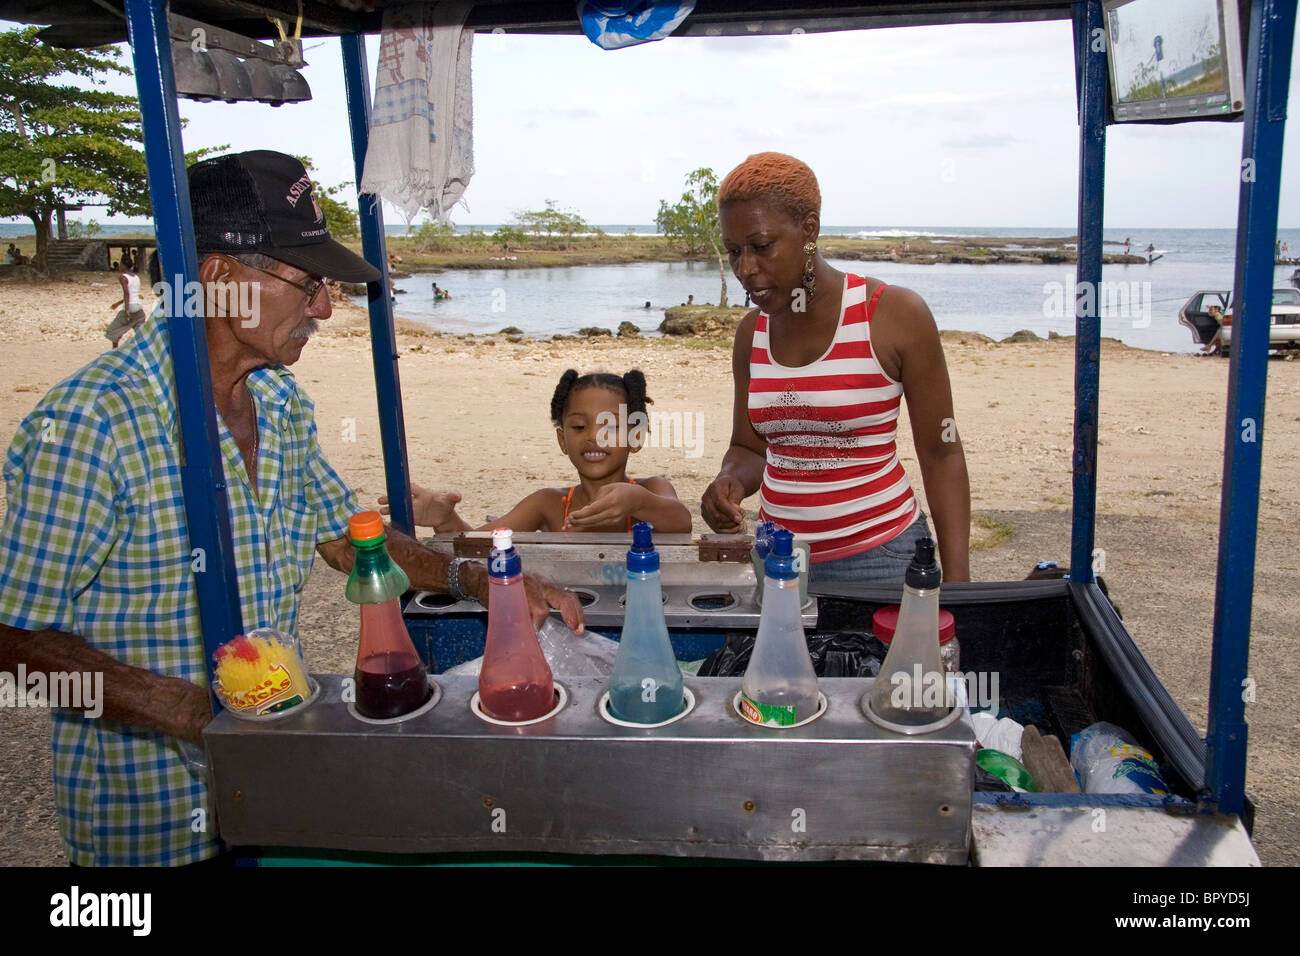 Shaved ice vendor at Puerto Limon, Costa Rica. Stock Photo